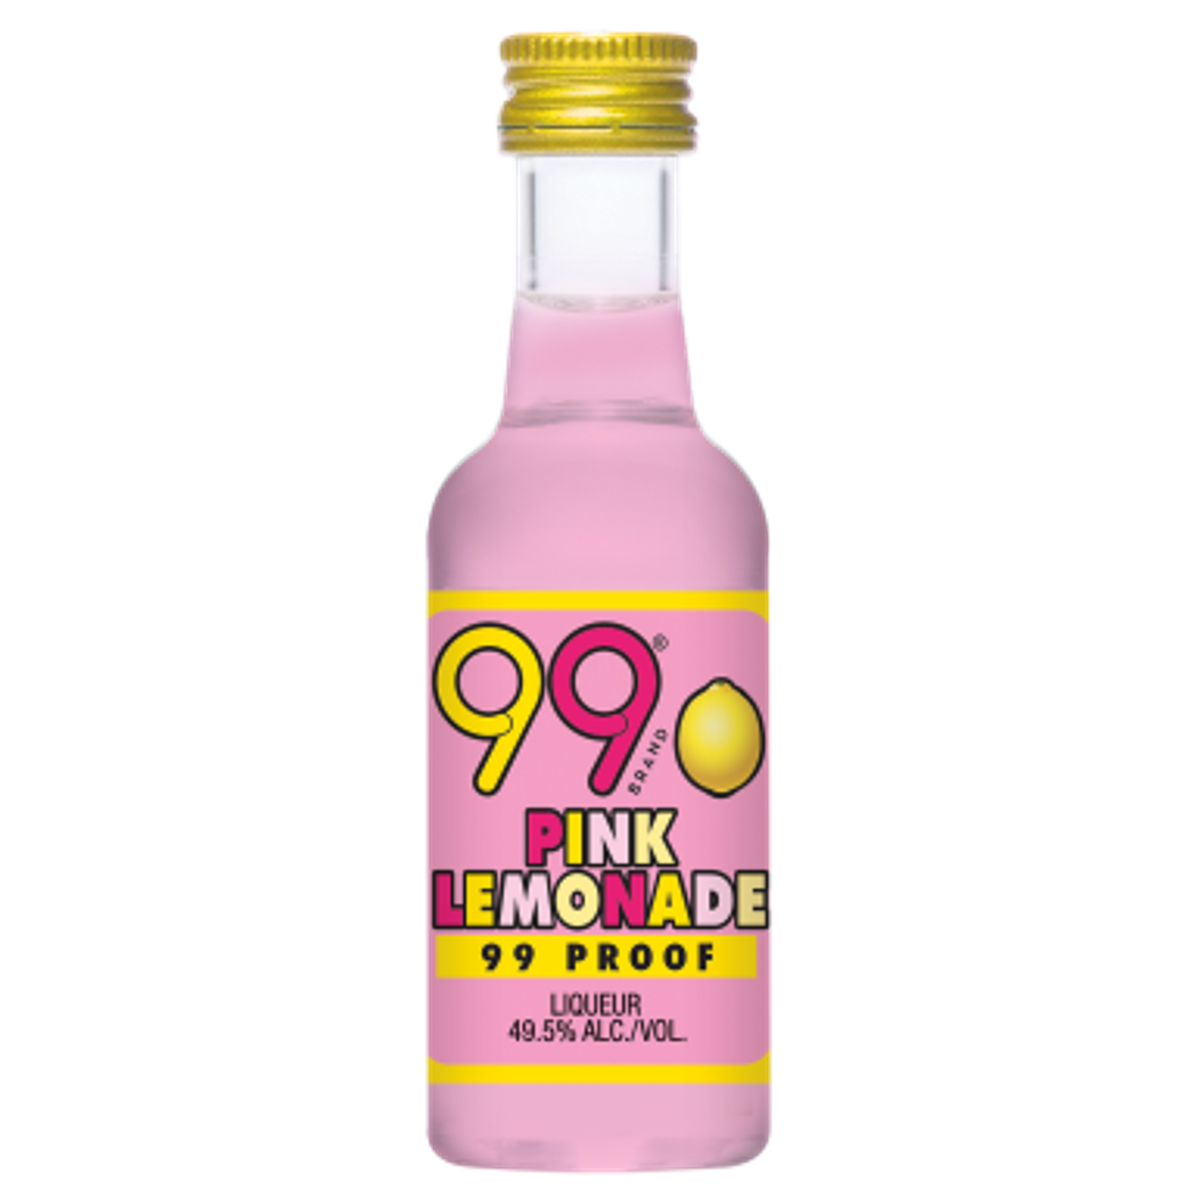 99 Brand Pink Lemonade Liqueur (12x50ml)